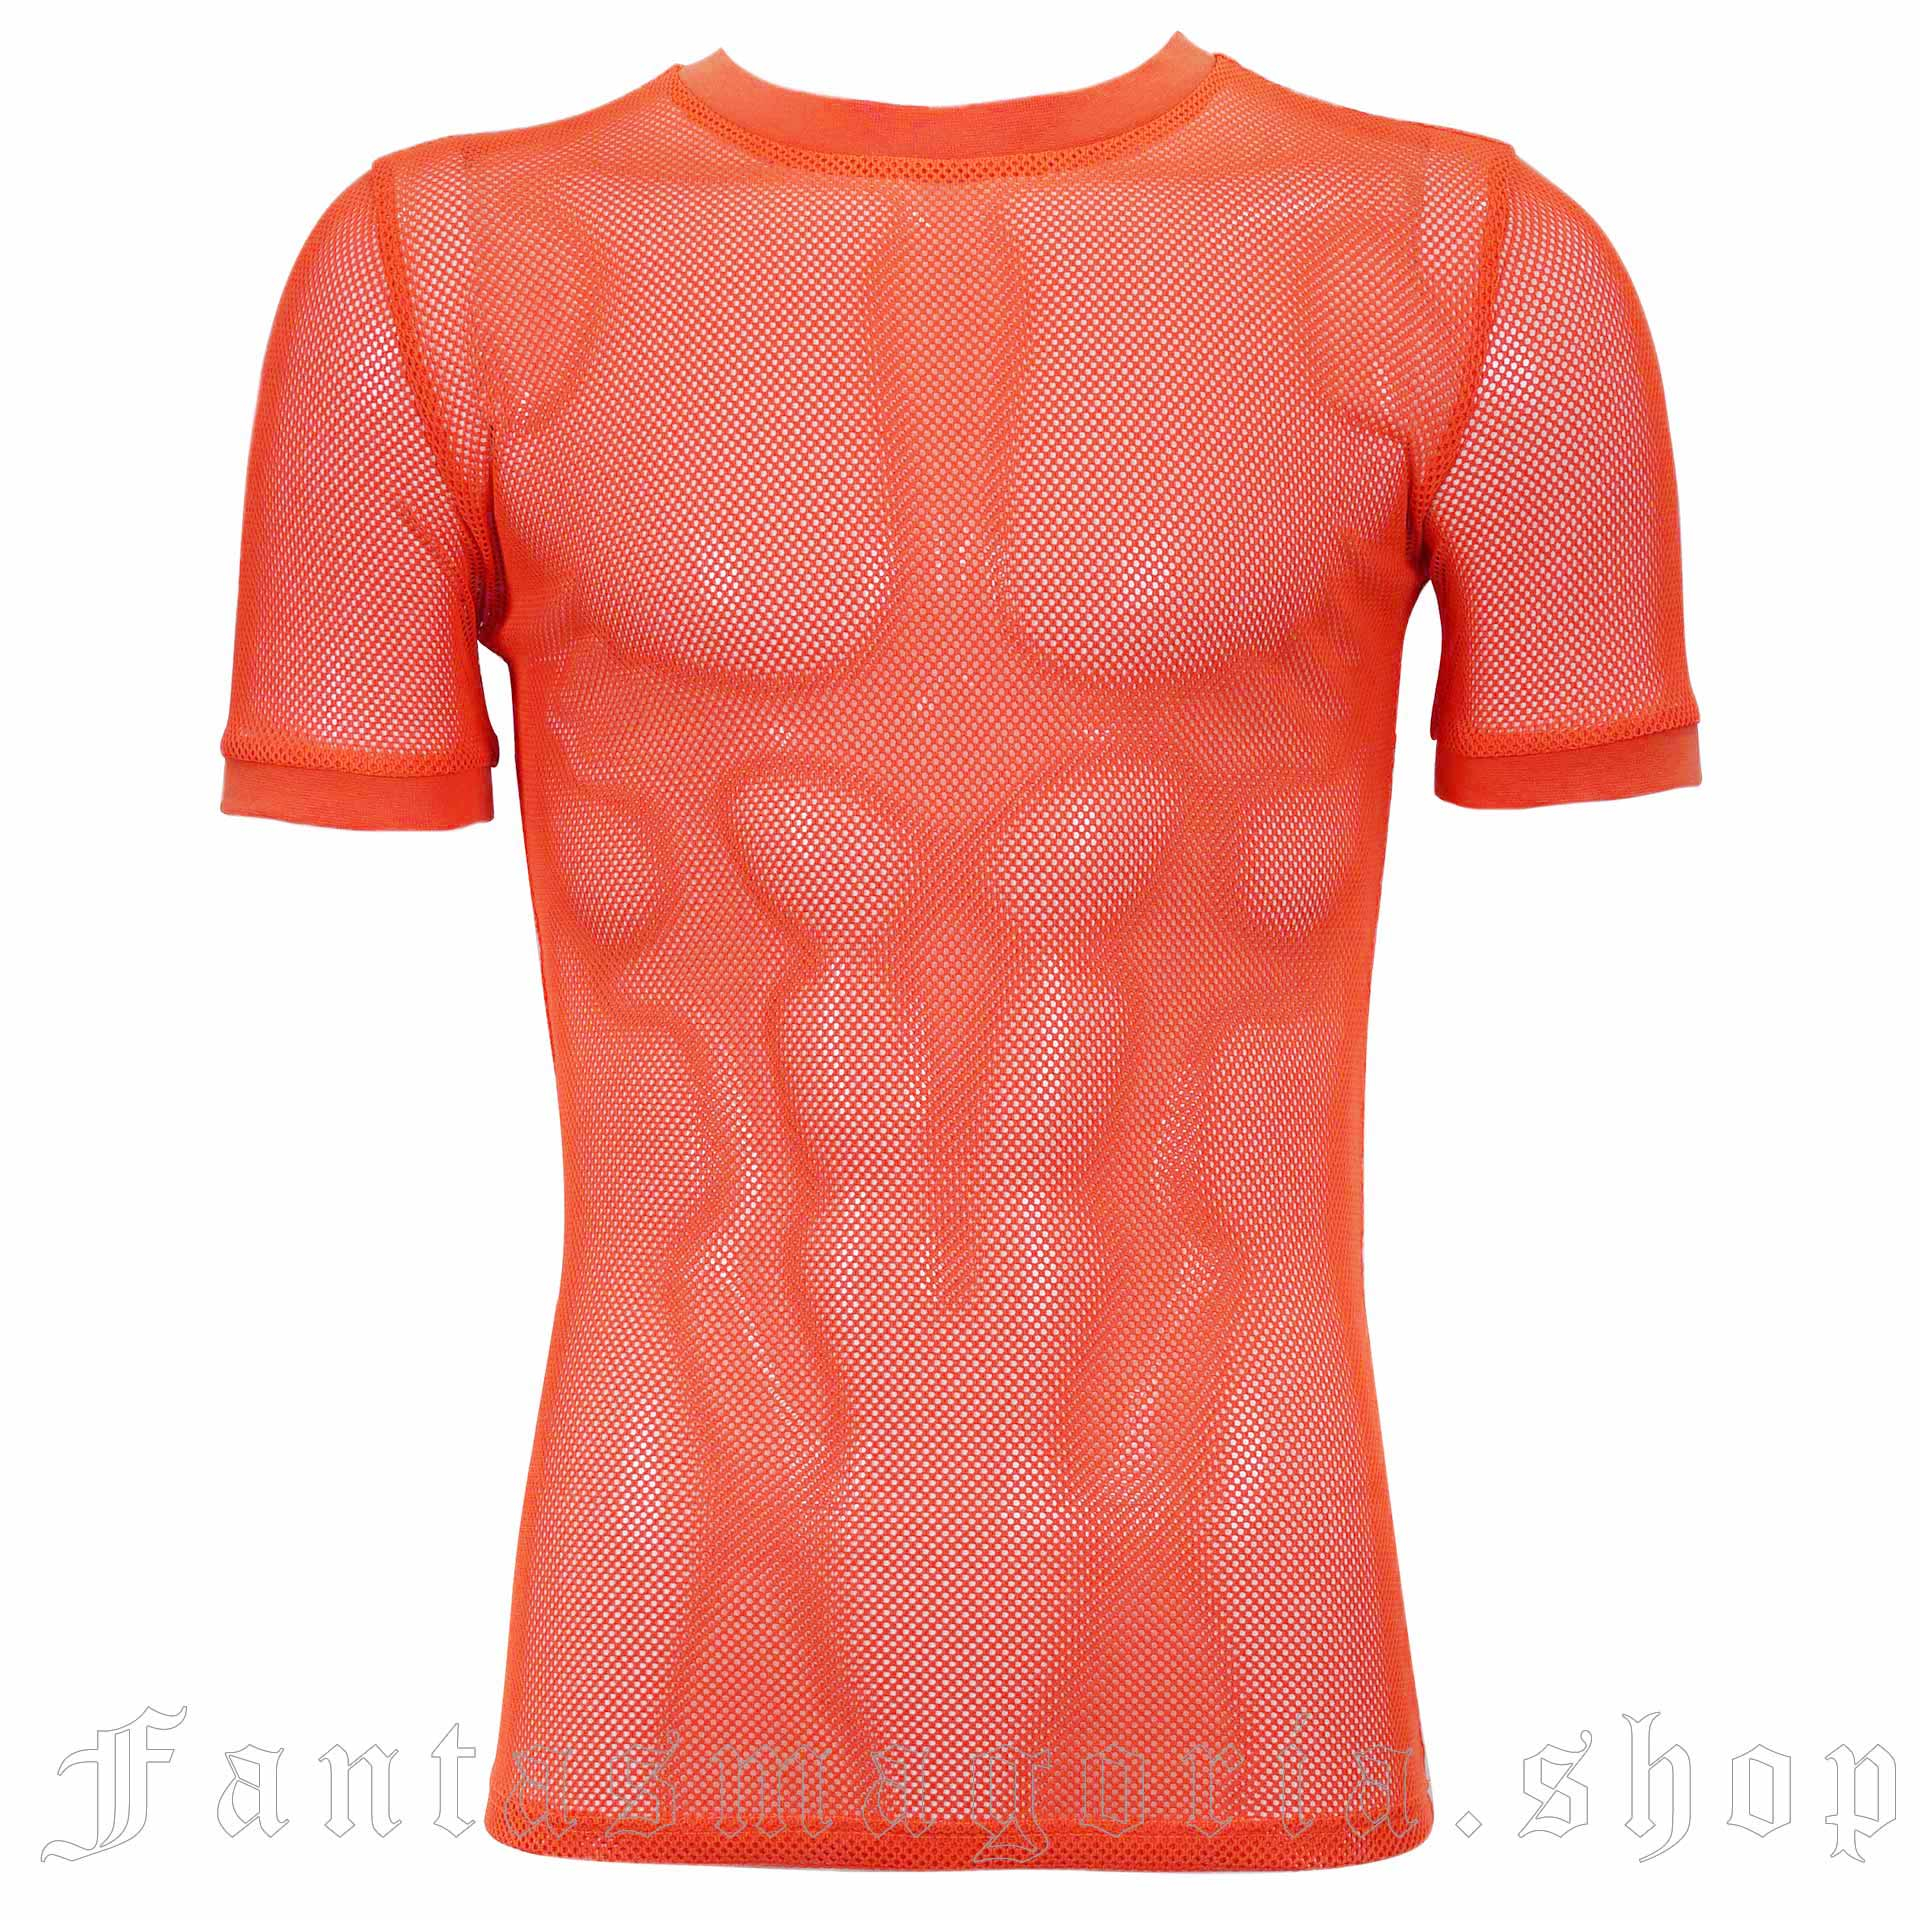 Agonoize Unisex Orange Top Devil Fashion TT03902/OR 1